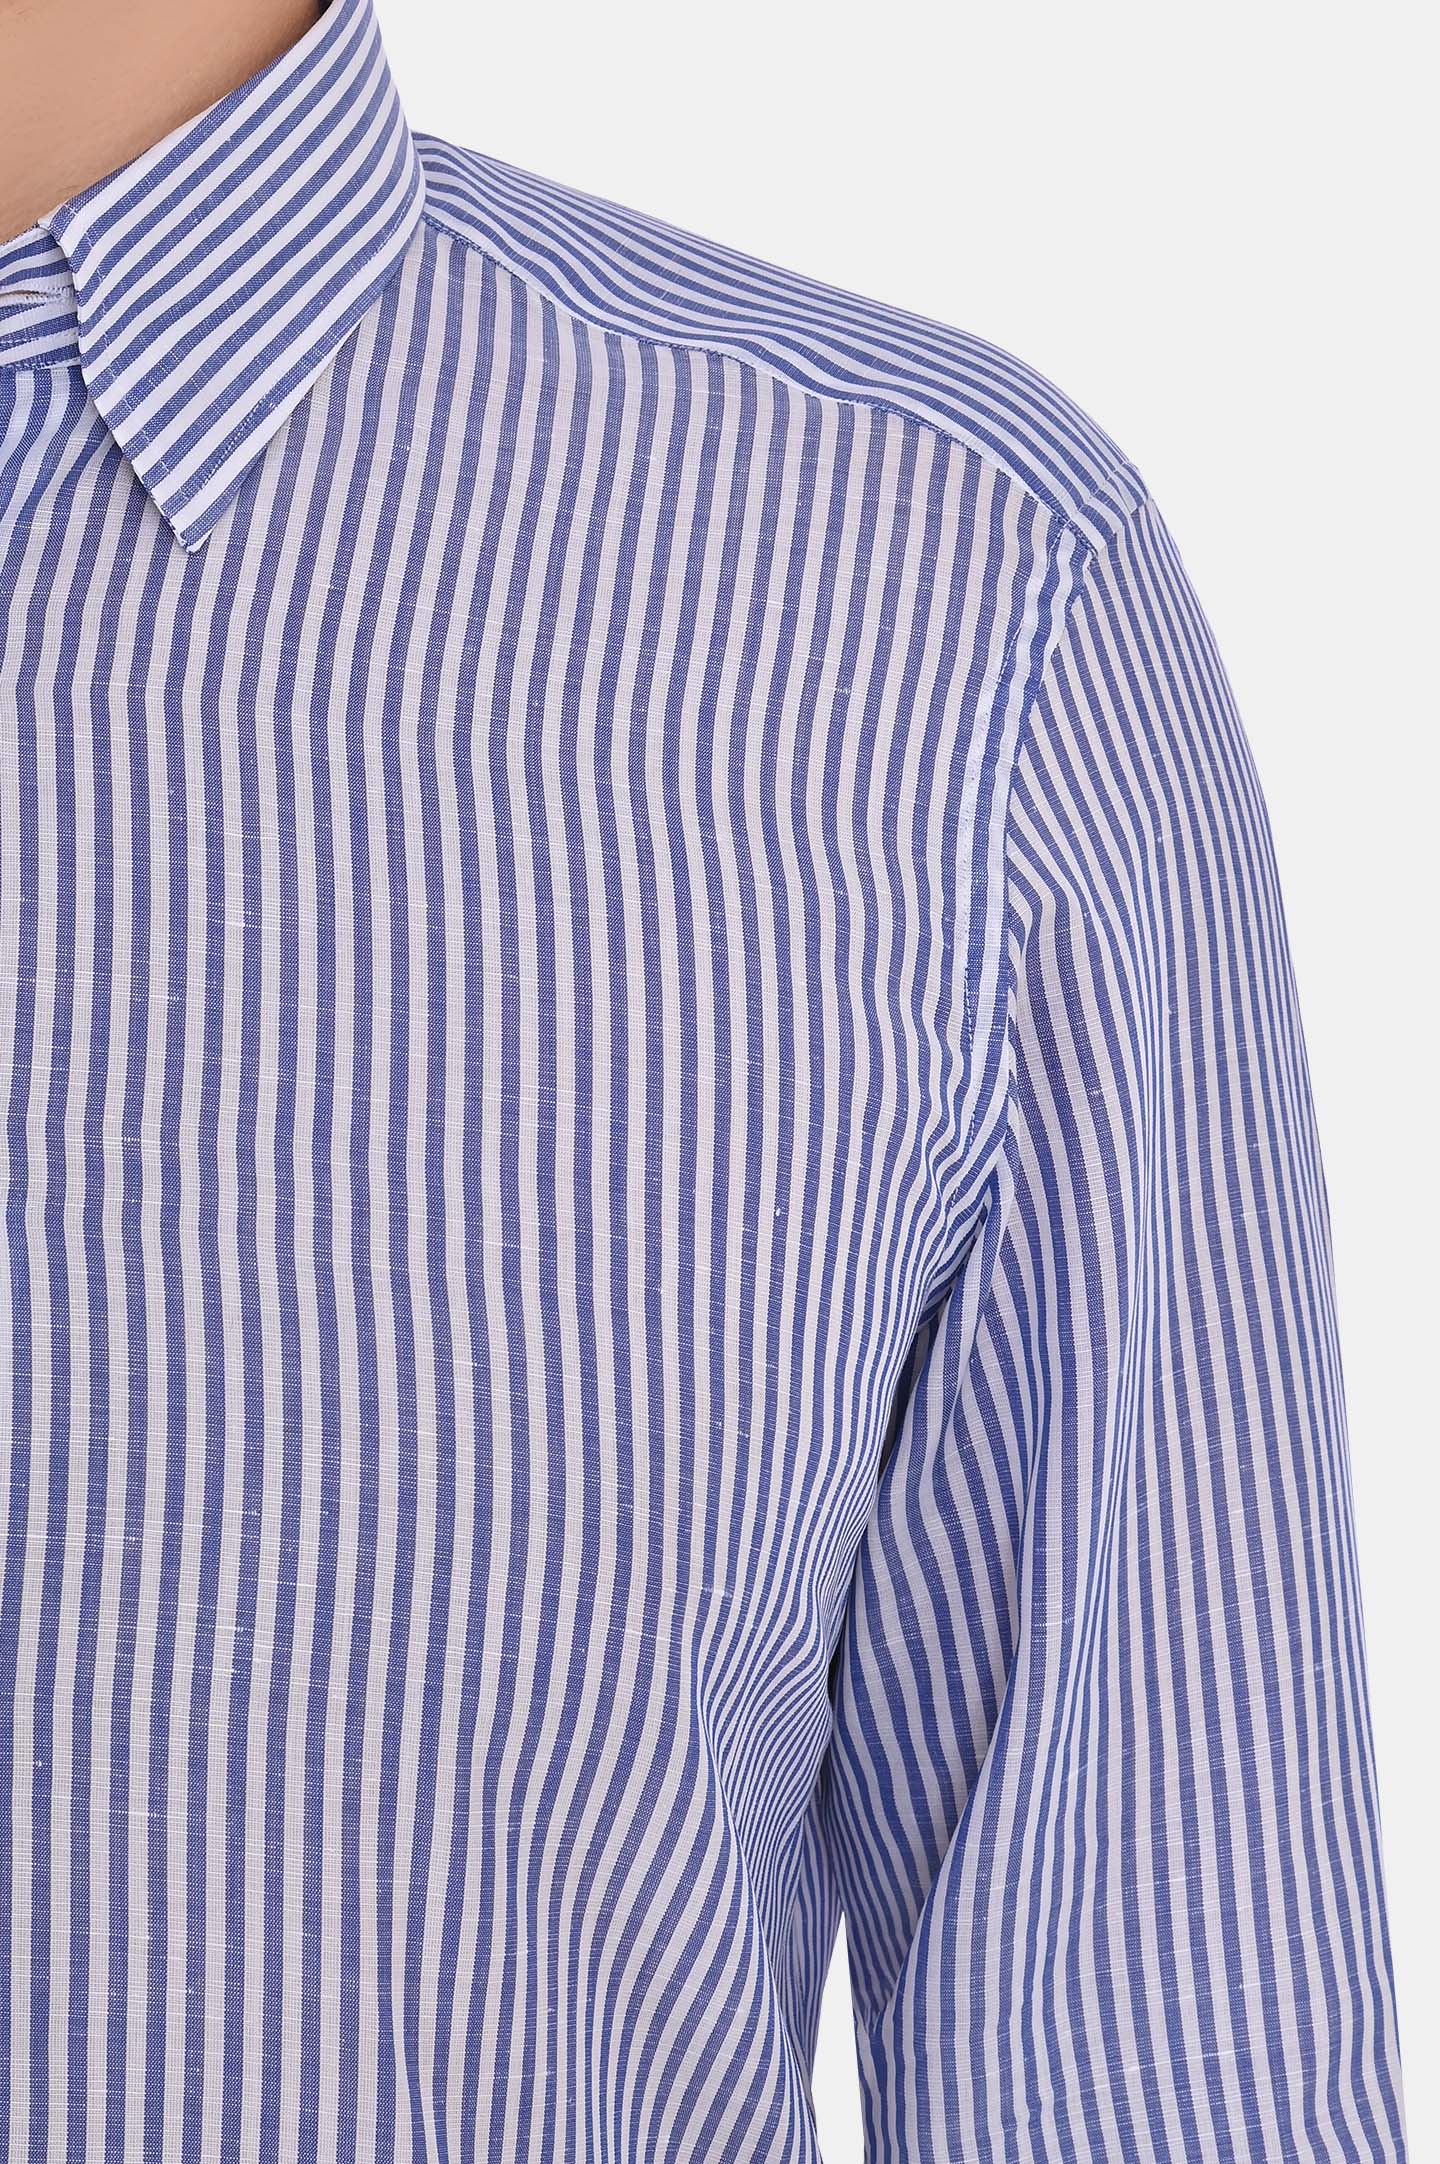 Рубашка CASTANGIA N-SIC66P 33067/54, цвет: Белый, Мужской